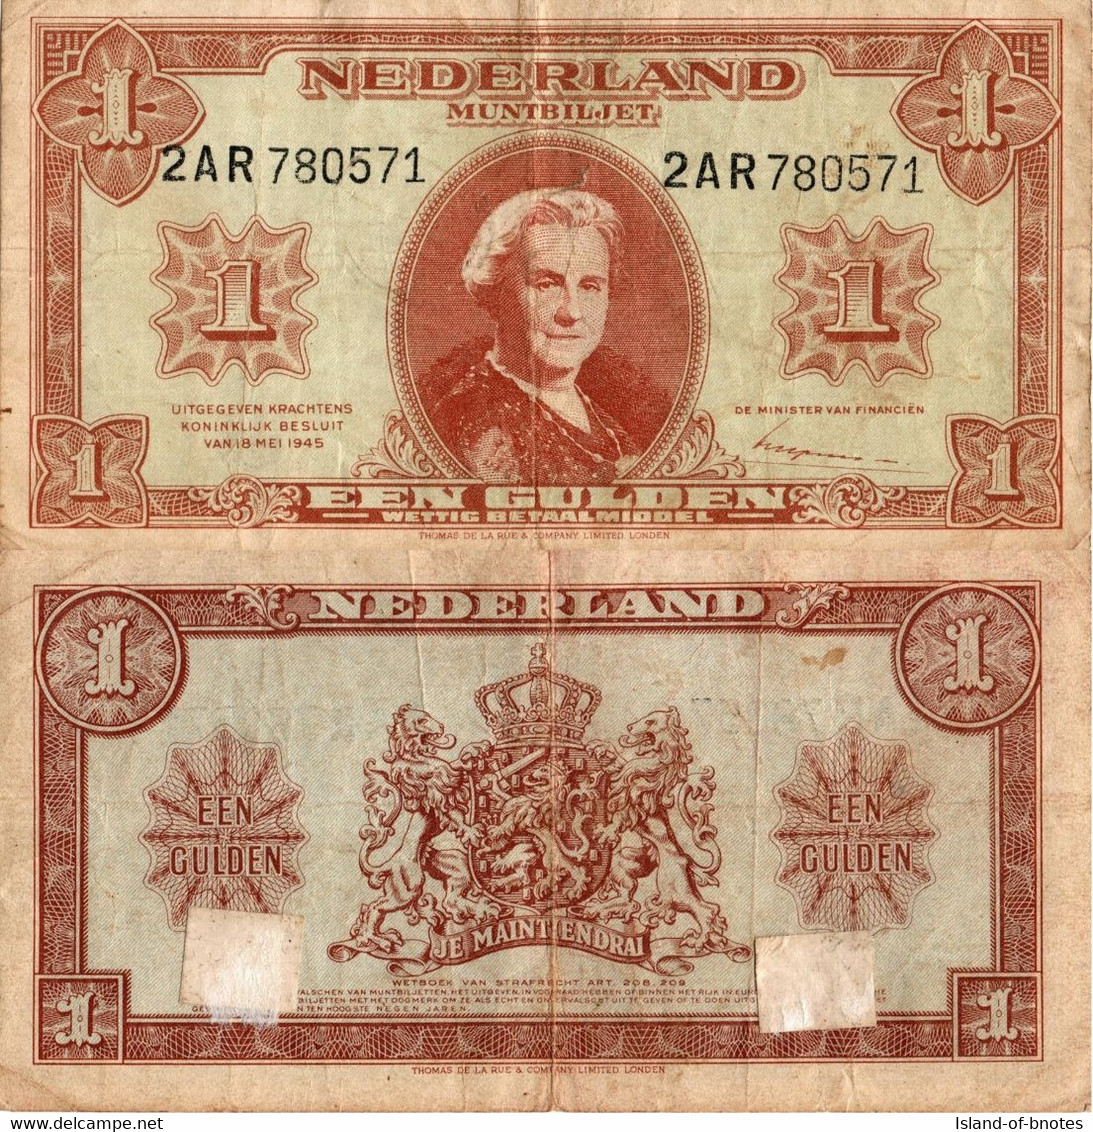 Netherlands / 1 Gulden / 1945 / P-70(a) / VF - 1 Gulden